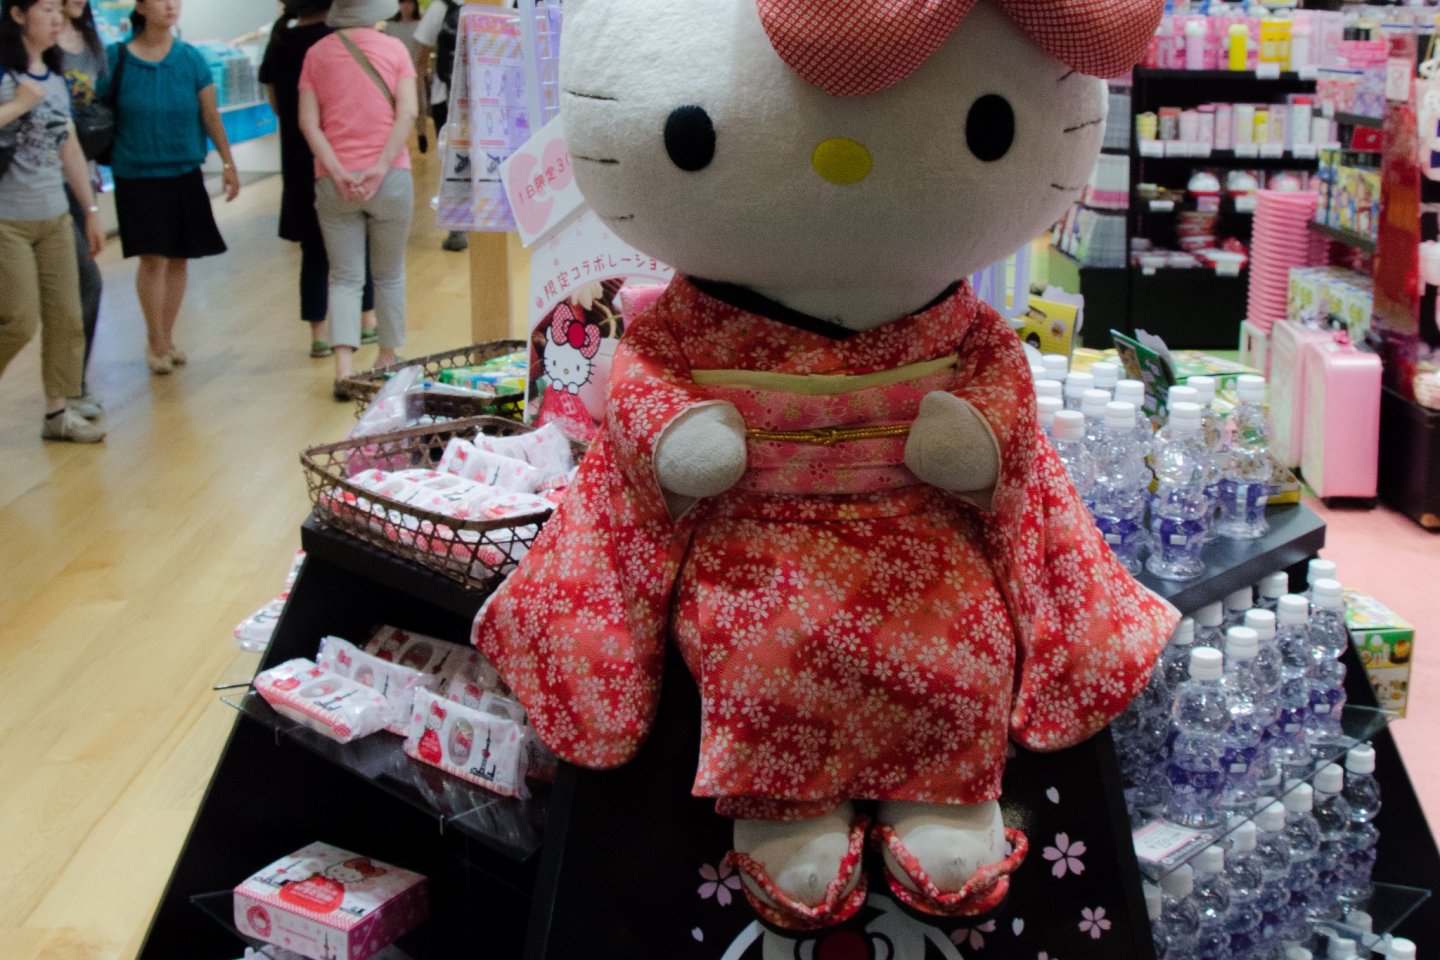 Belanja Suvenir di Toko Hello Kitty. Tax Free!